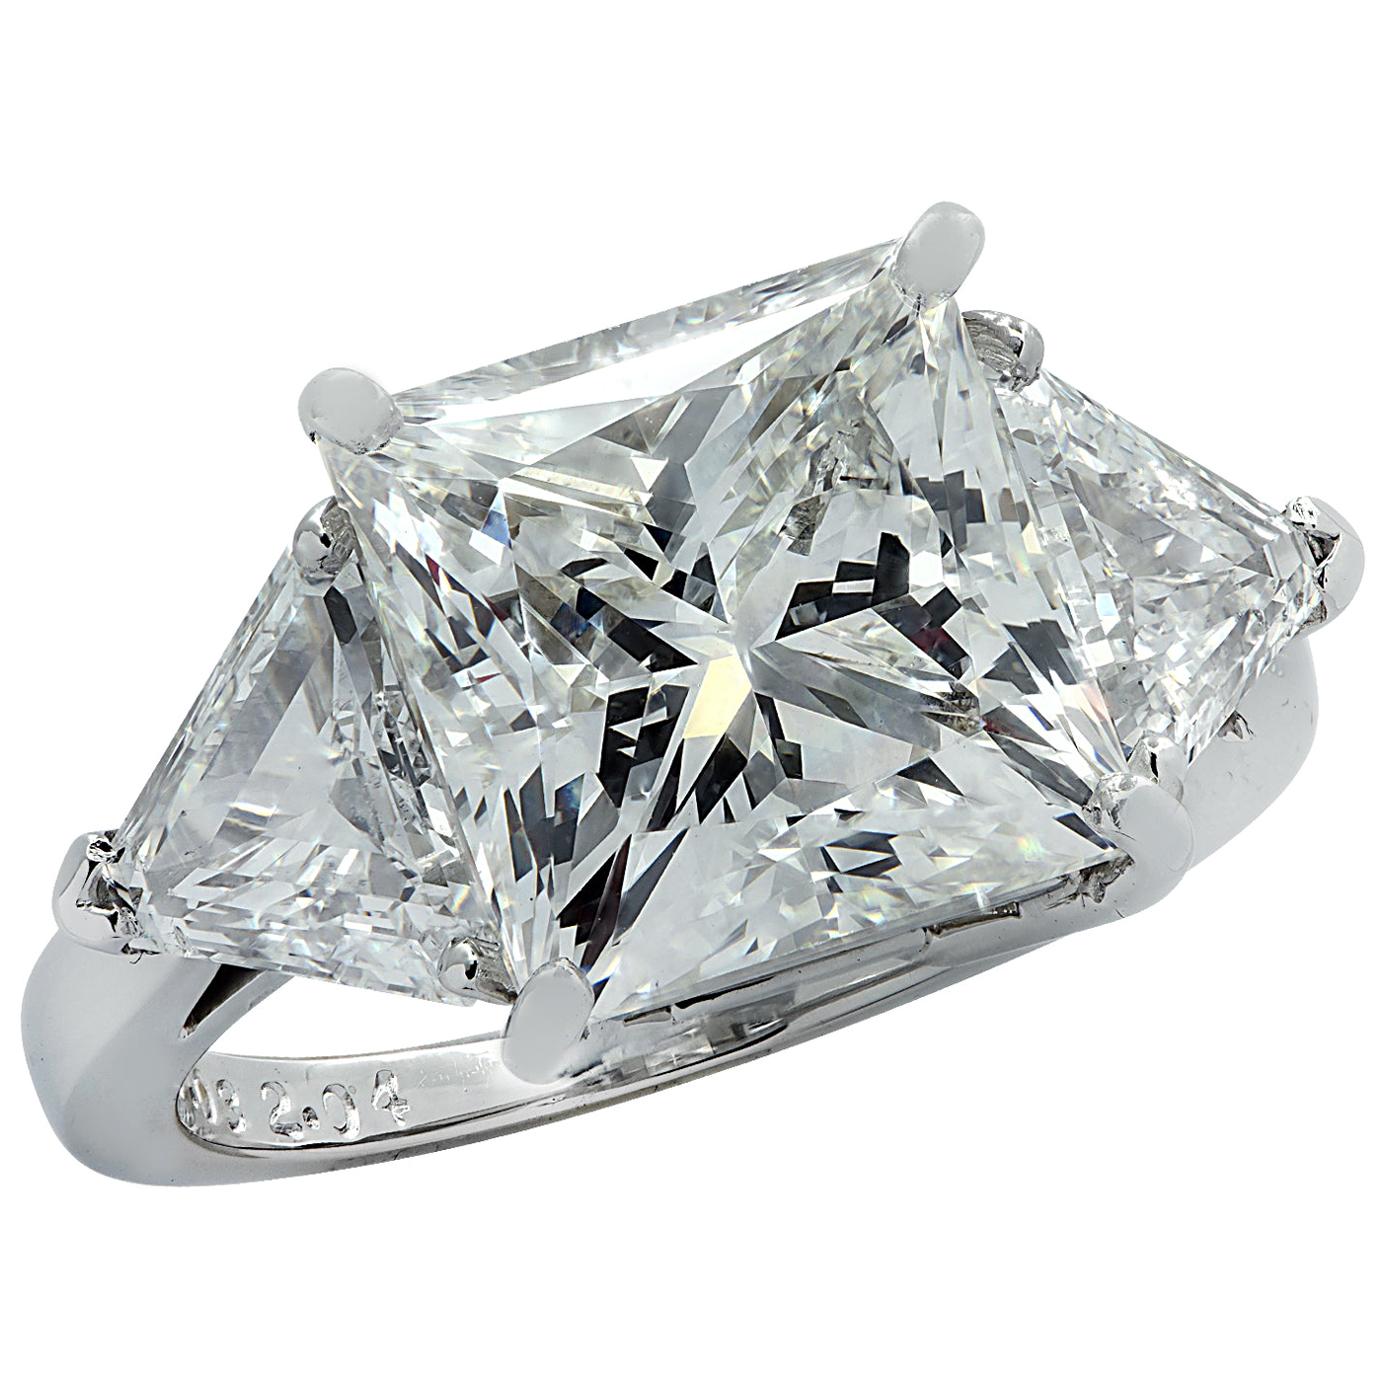 Vivid Diamonds GIA Certified 7.03 Carat Princess Cut Diamond Engagement Ring